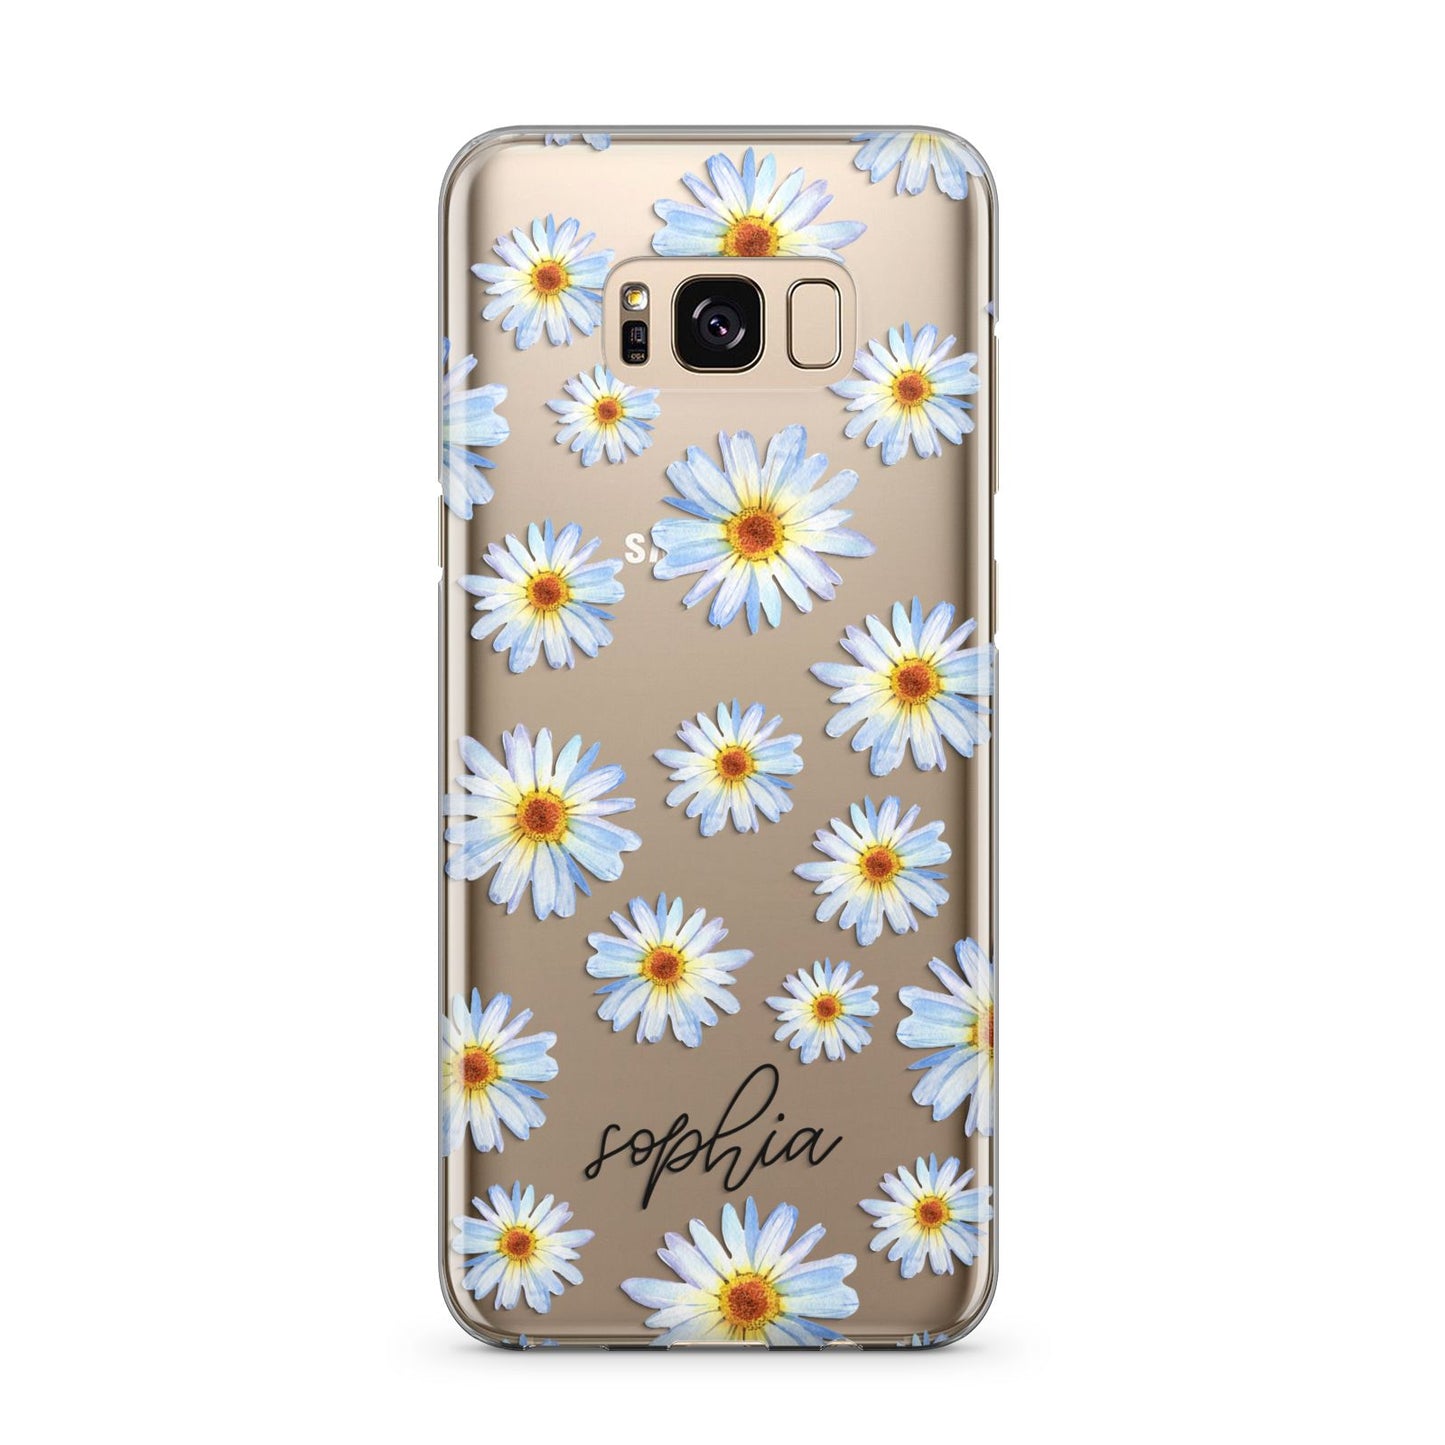 Personalised Daisy Samsung Galaxy S8 Plus Case